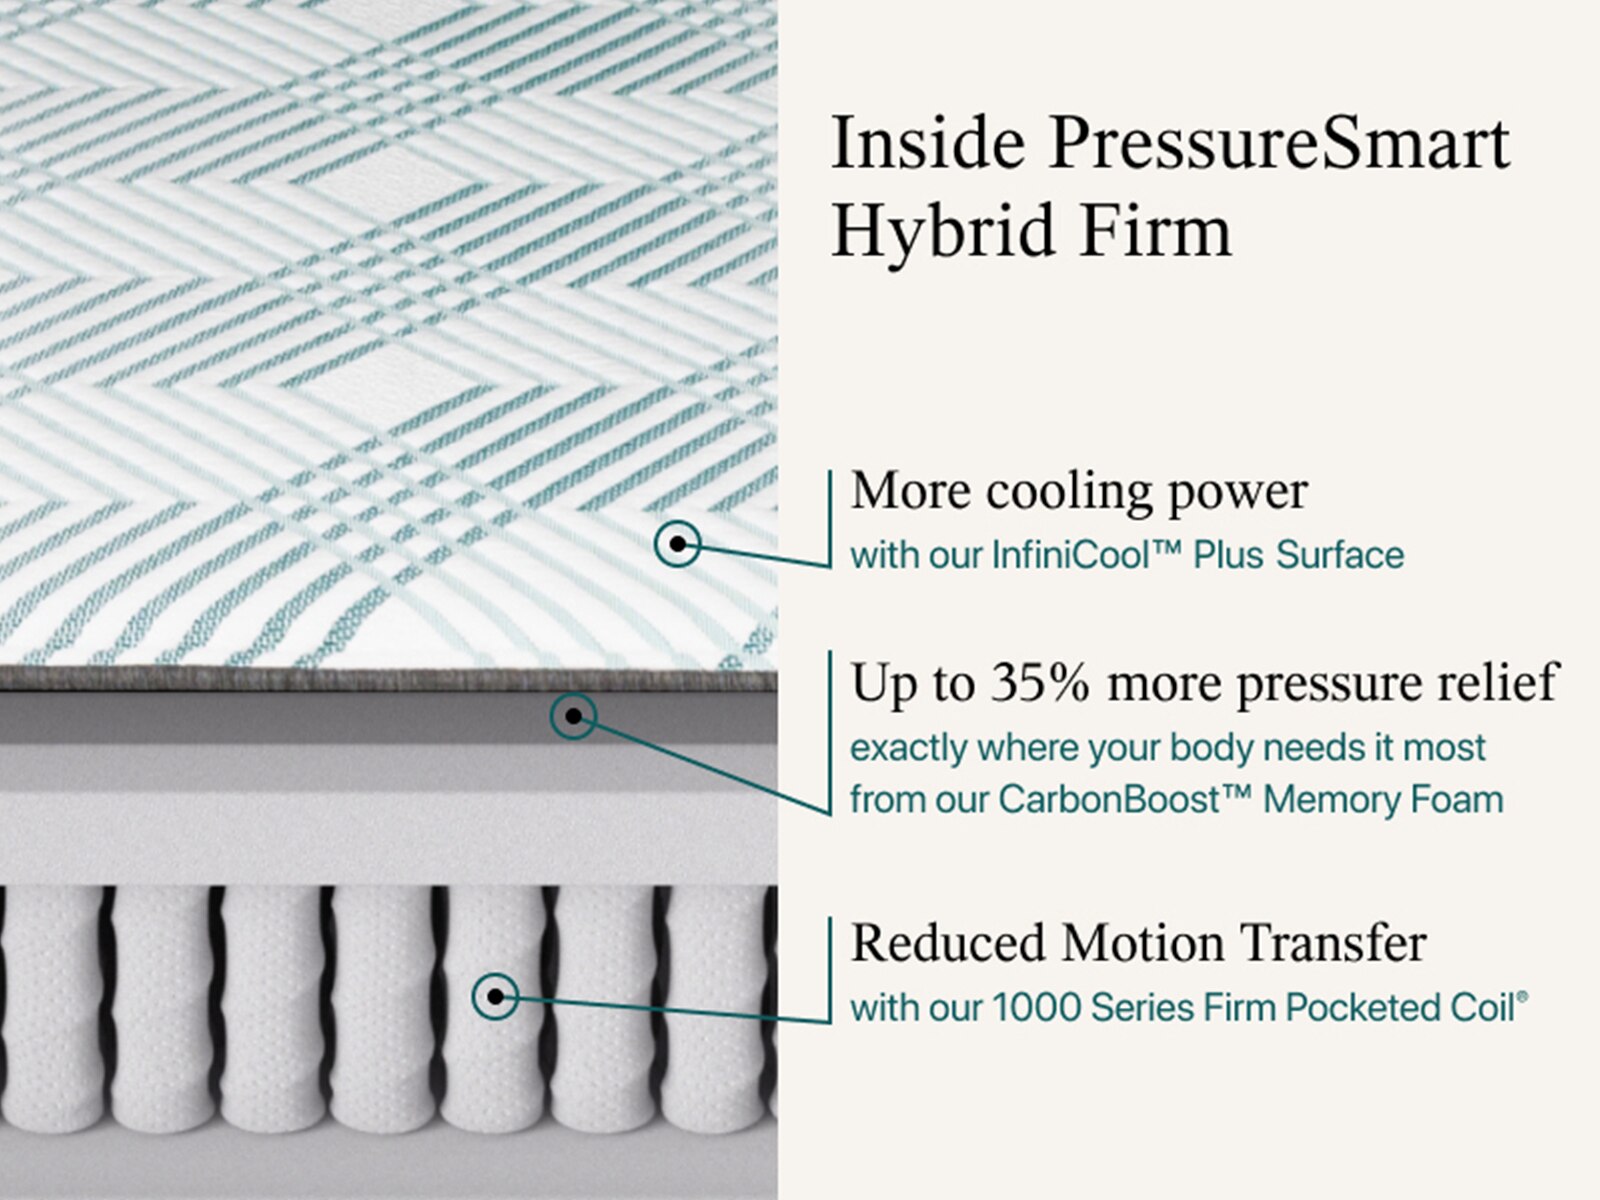 beautyrest pressuresmart 2.0 hybrid medium 13 mattress